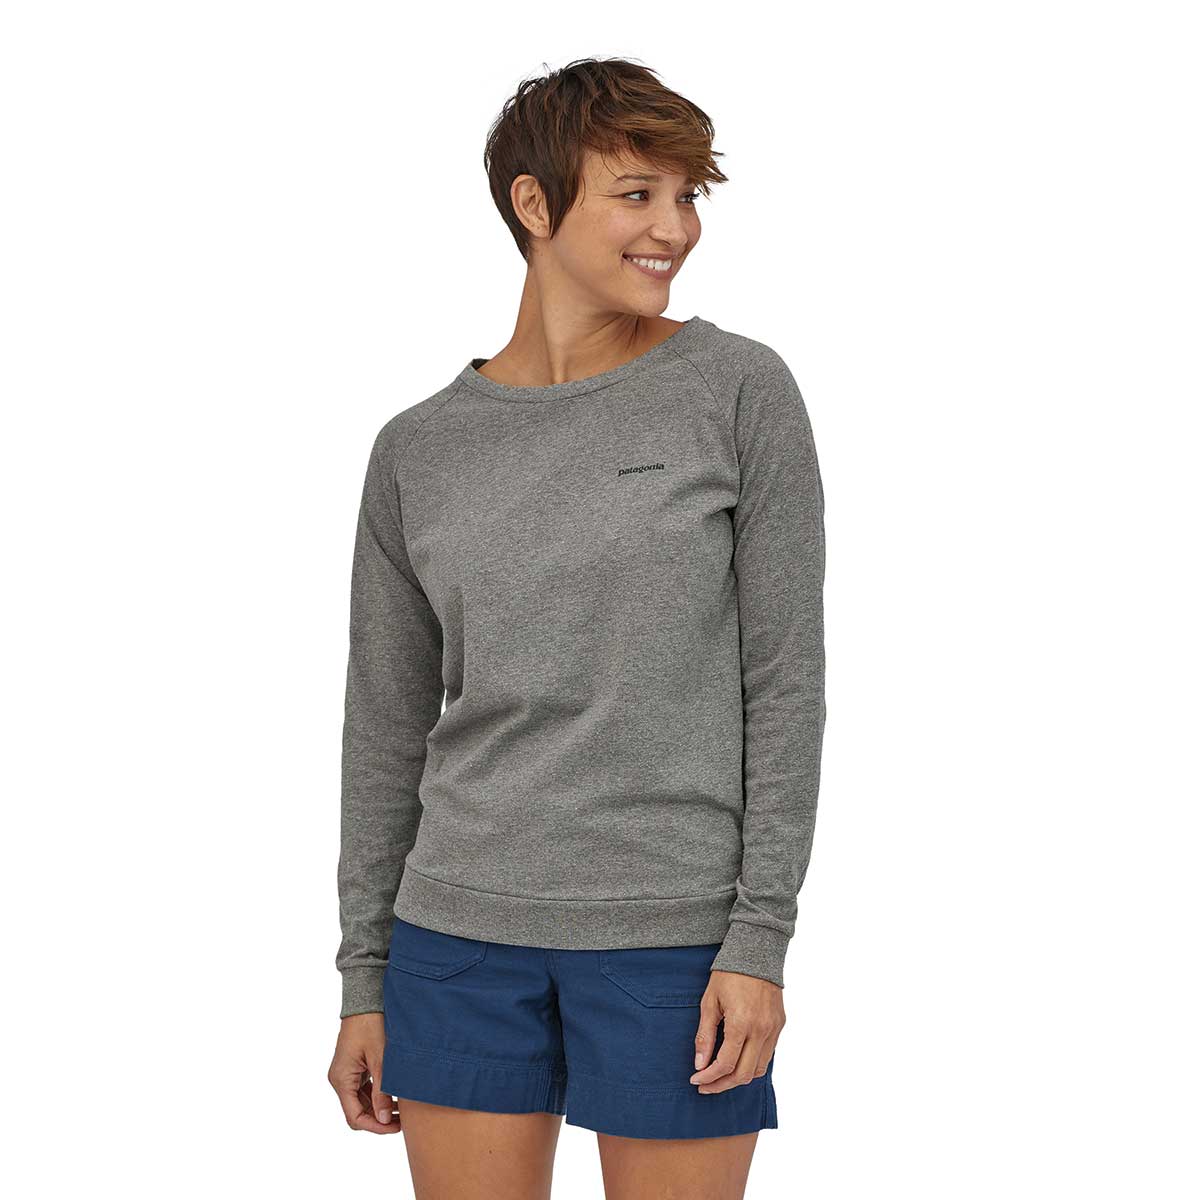 Women's Long Sleeve T-Shirt - pewcci